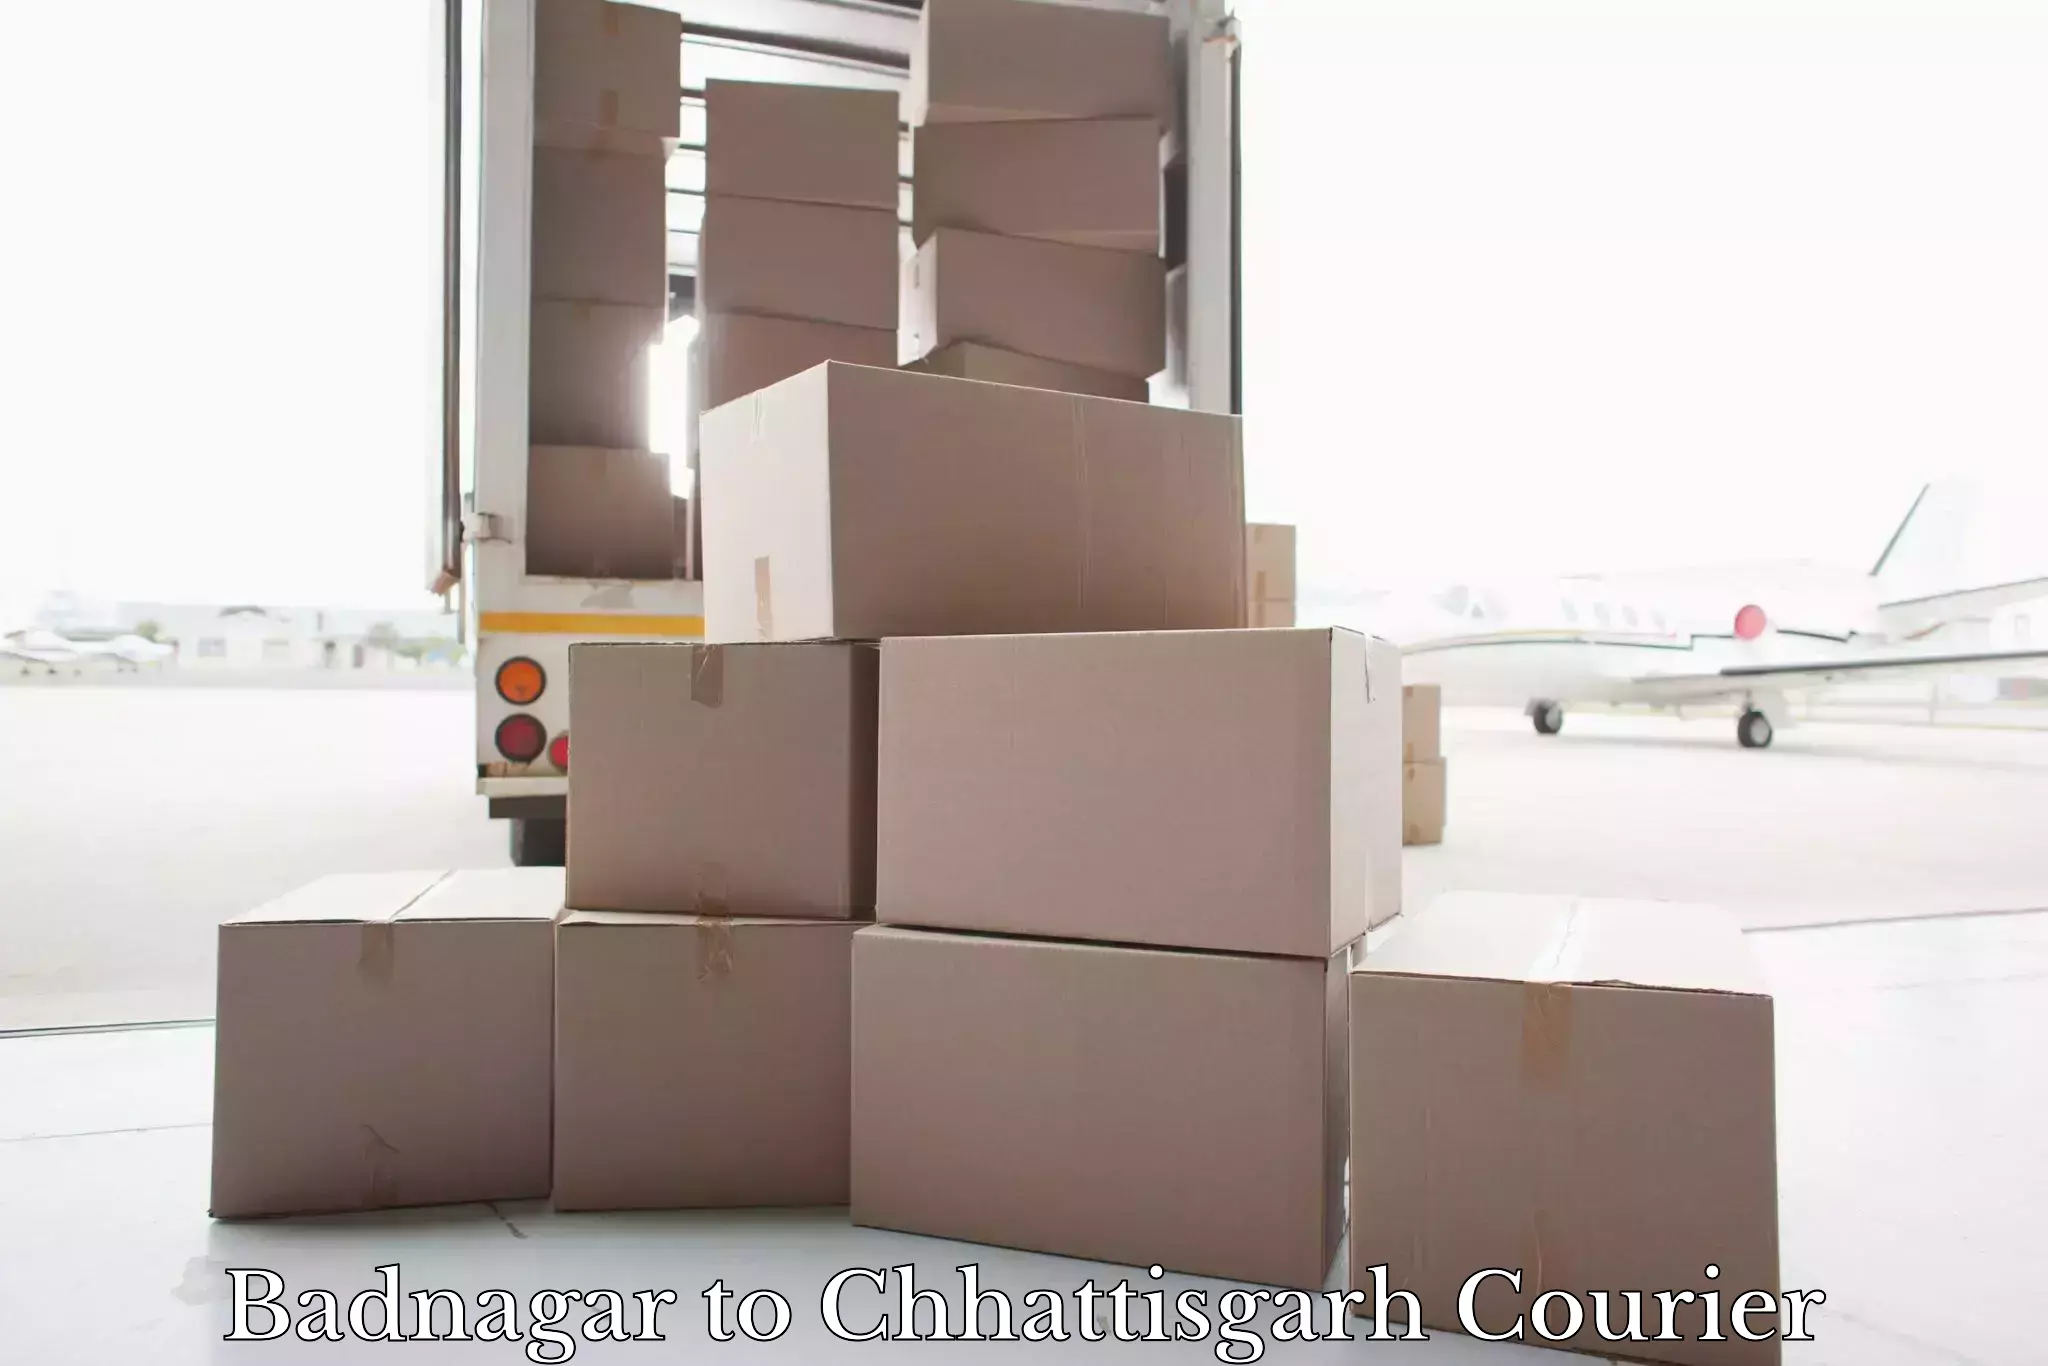 Airport luggage delivery in Badnagar to Chhattisgarh